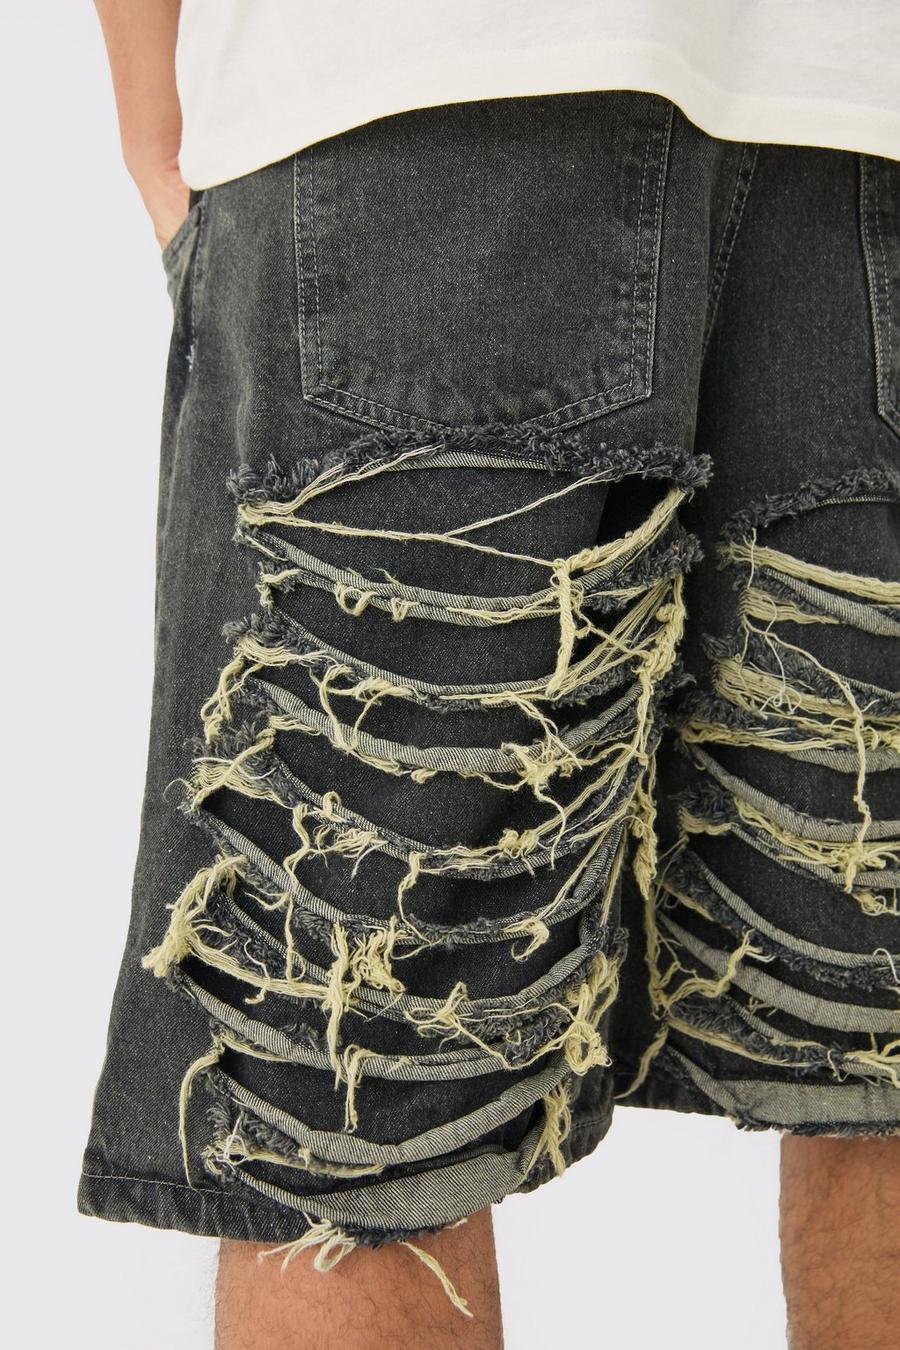 Lockere extrem zerrissene Jeansshorts in Antik-Grau, Grey